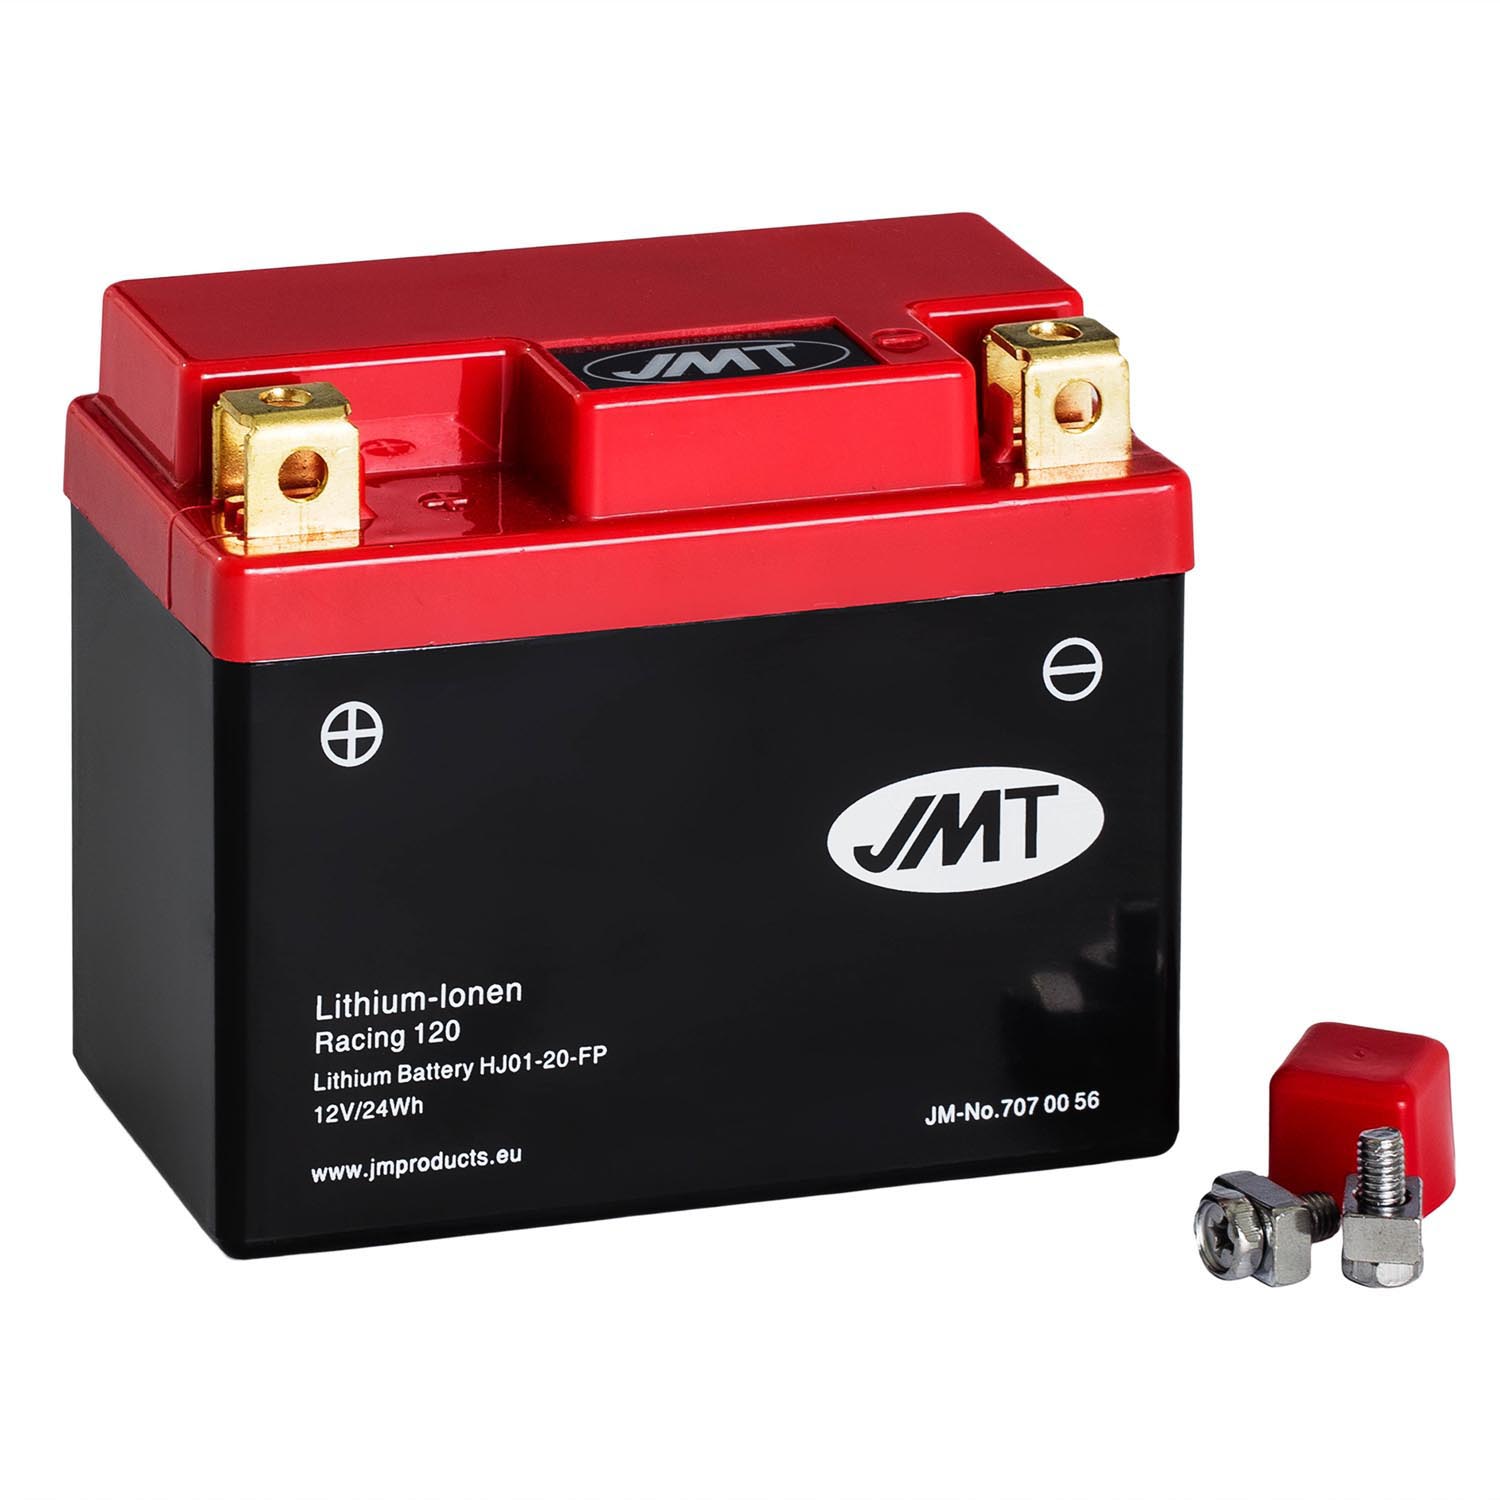 JMT Lithium-Ionen-Motorrad-Batterie HJ01-20-FP 12V